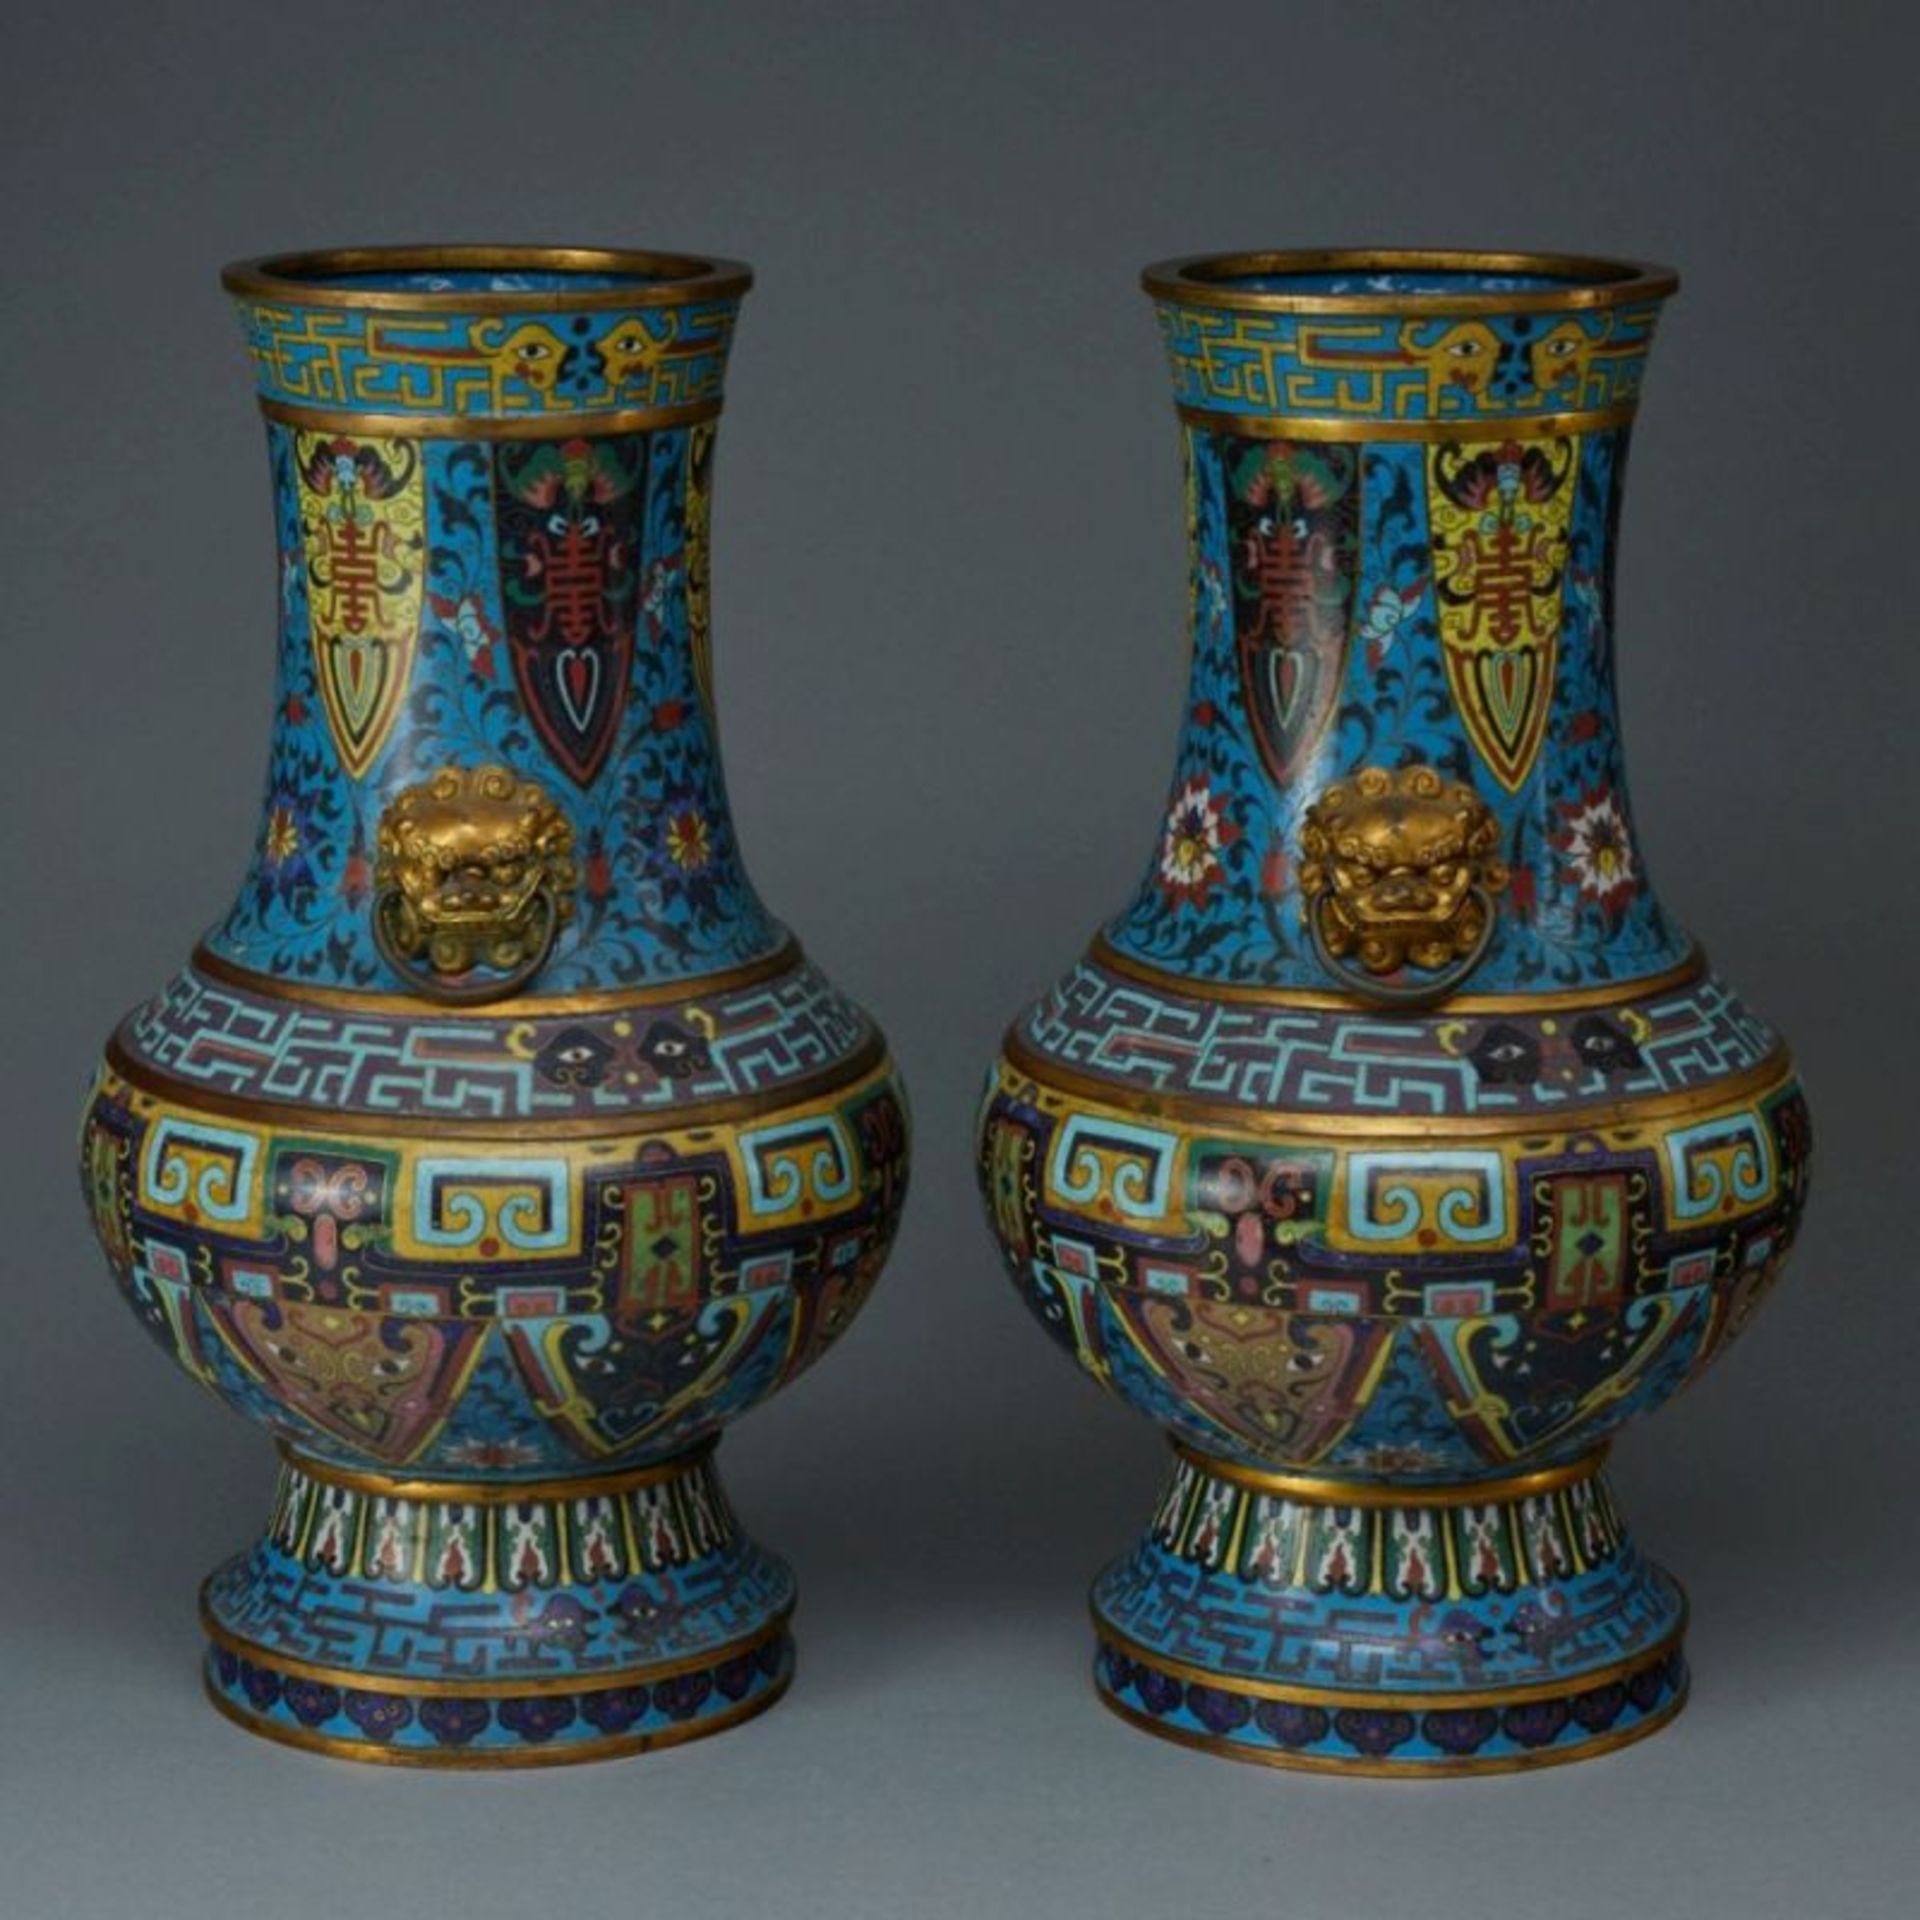 Paar alte Cloisonné Vasen, China, Qing Dynastie, wohl um 1800 - Image 3 of 4